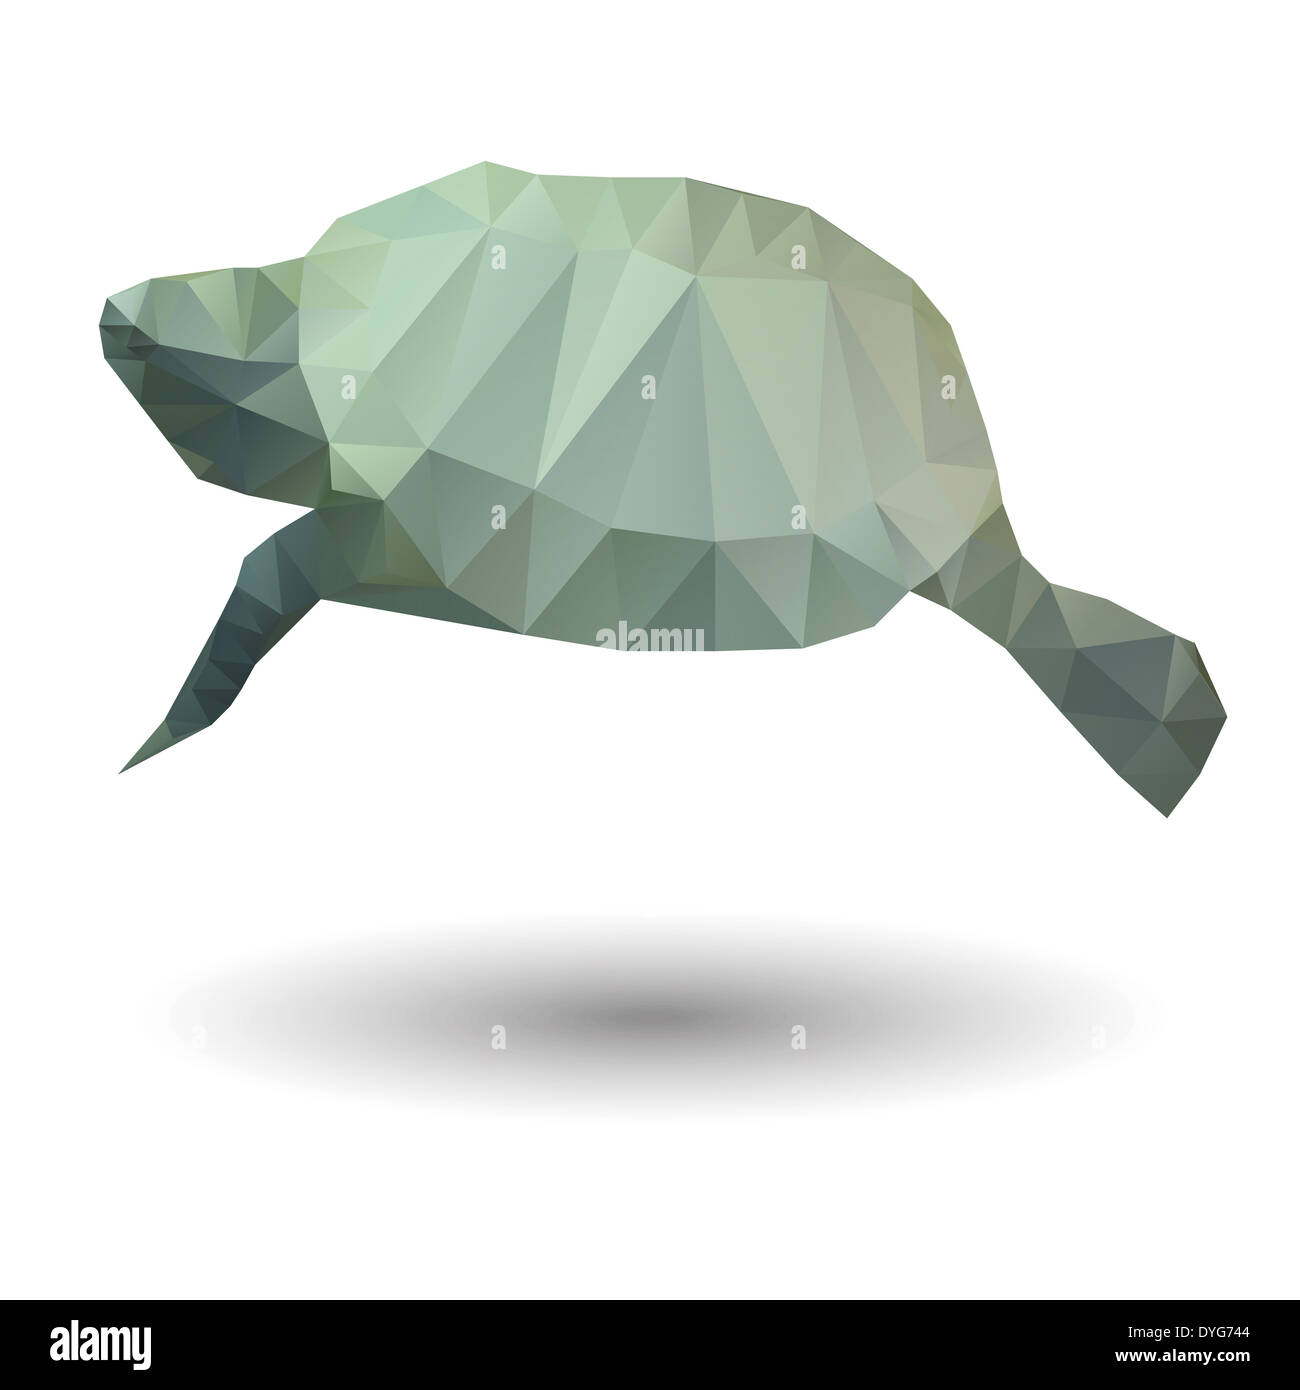 Abstract illustration de tortue de mer en origami sur fond blanc Banque D'Images